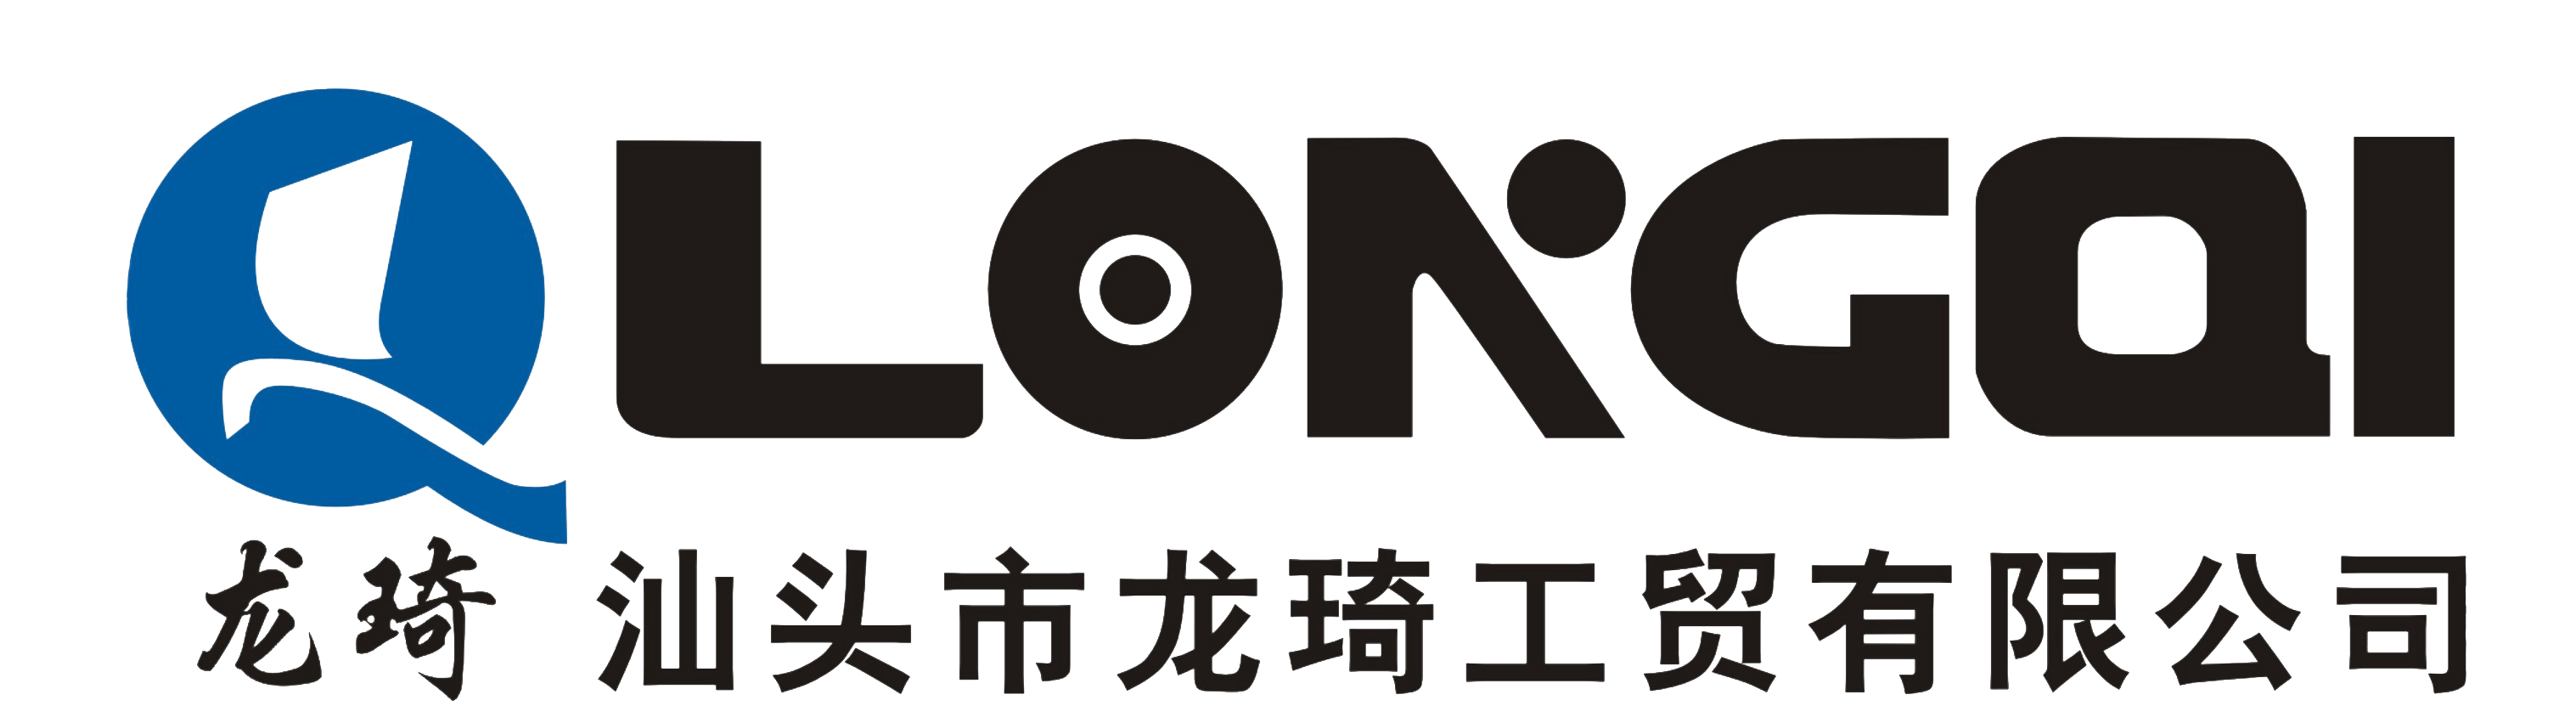 Shantou Longqi Industry & Trading Co., Ltd.,http://stlongqi.com